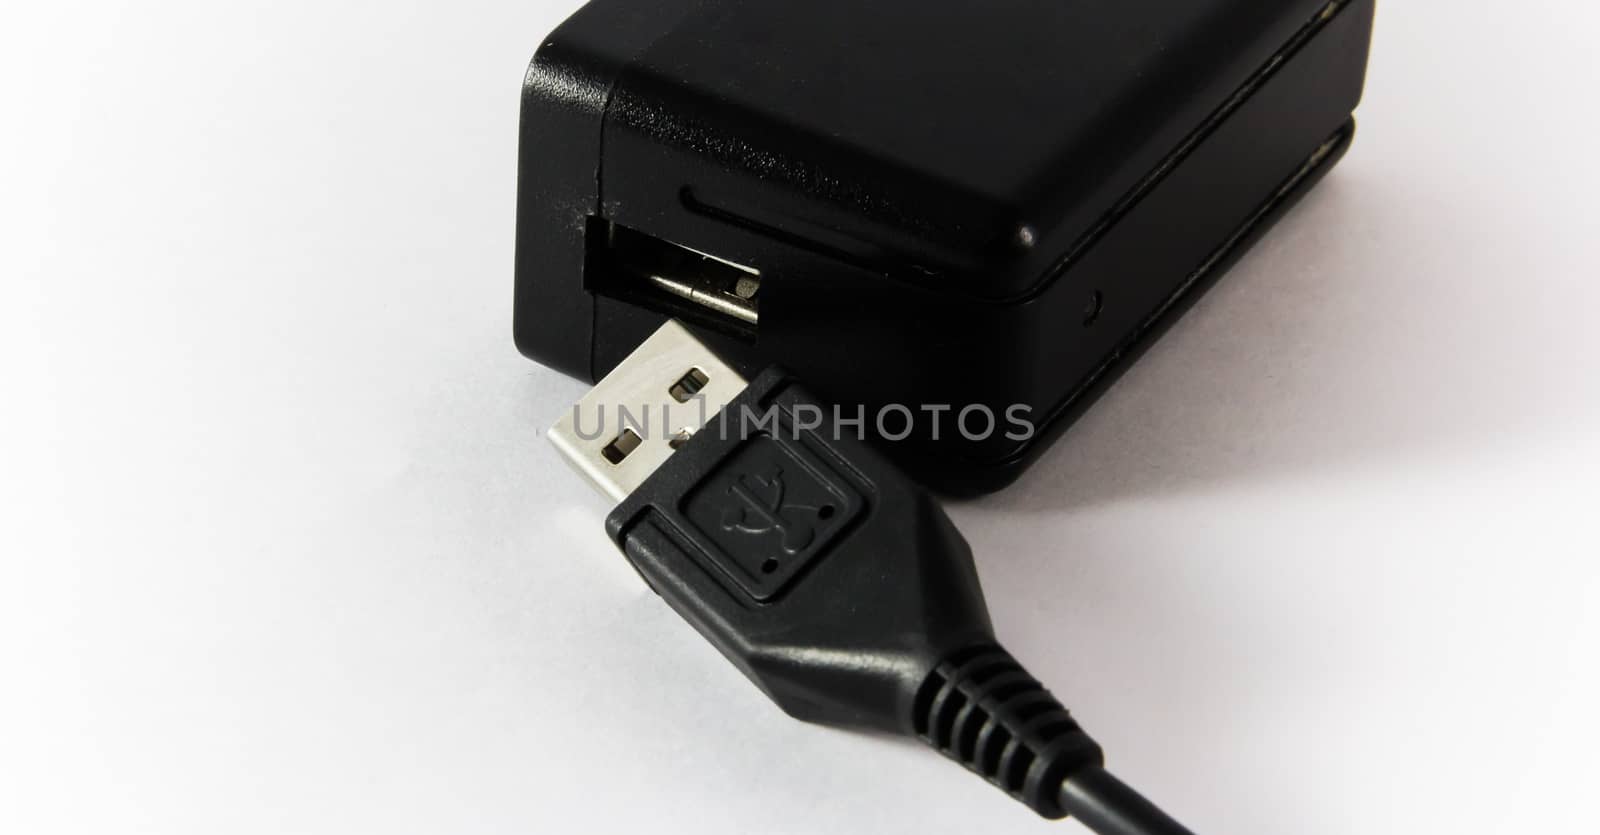 USB hub and USB cable by suriyaph